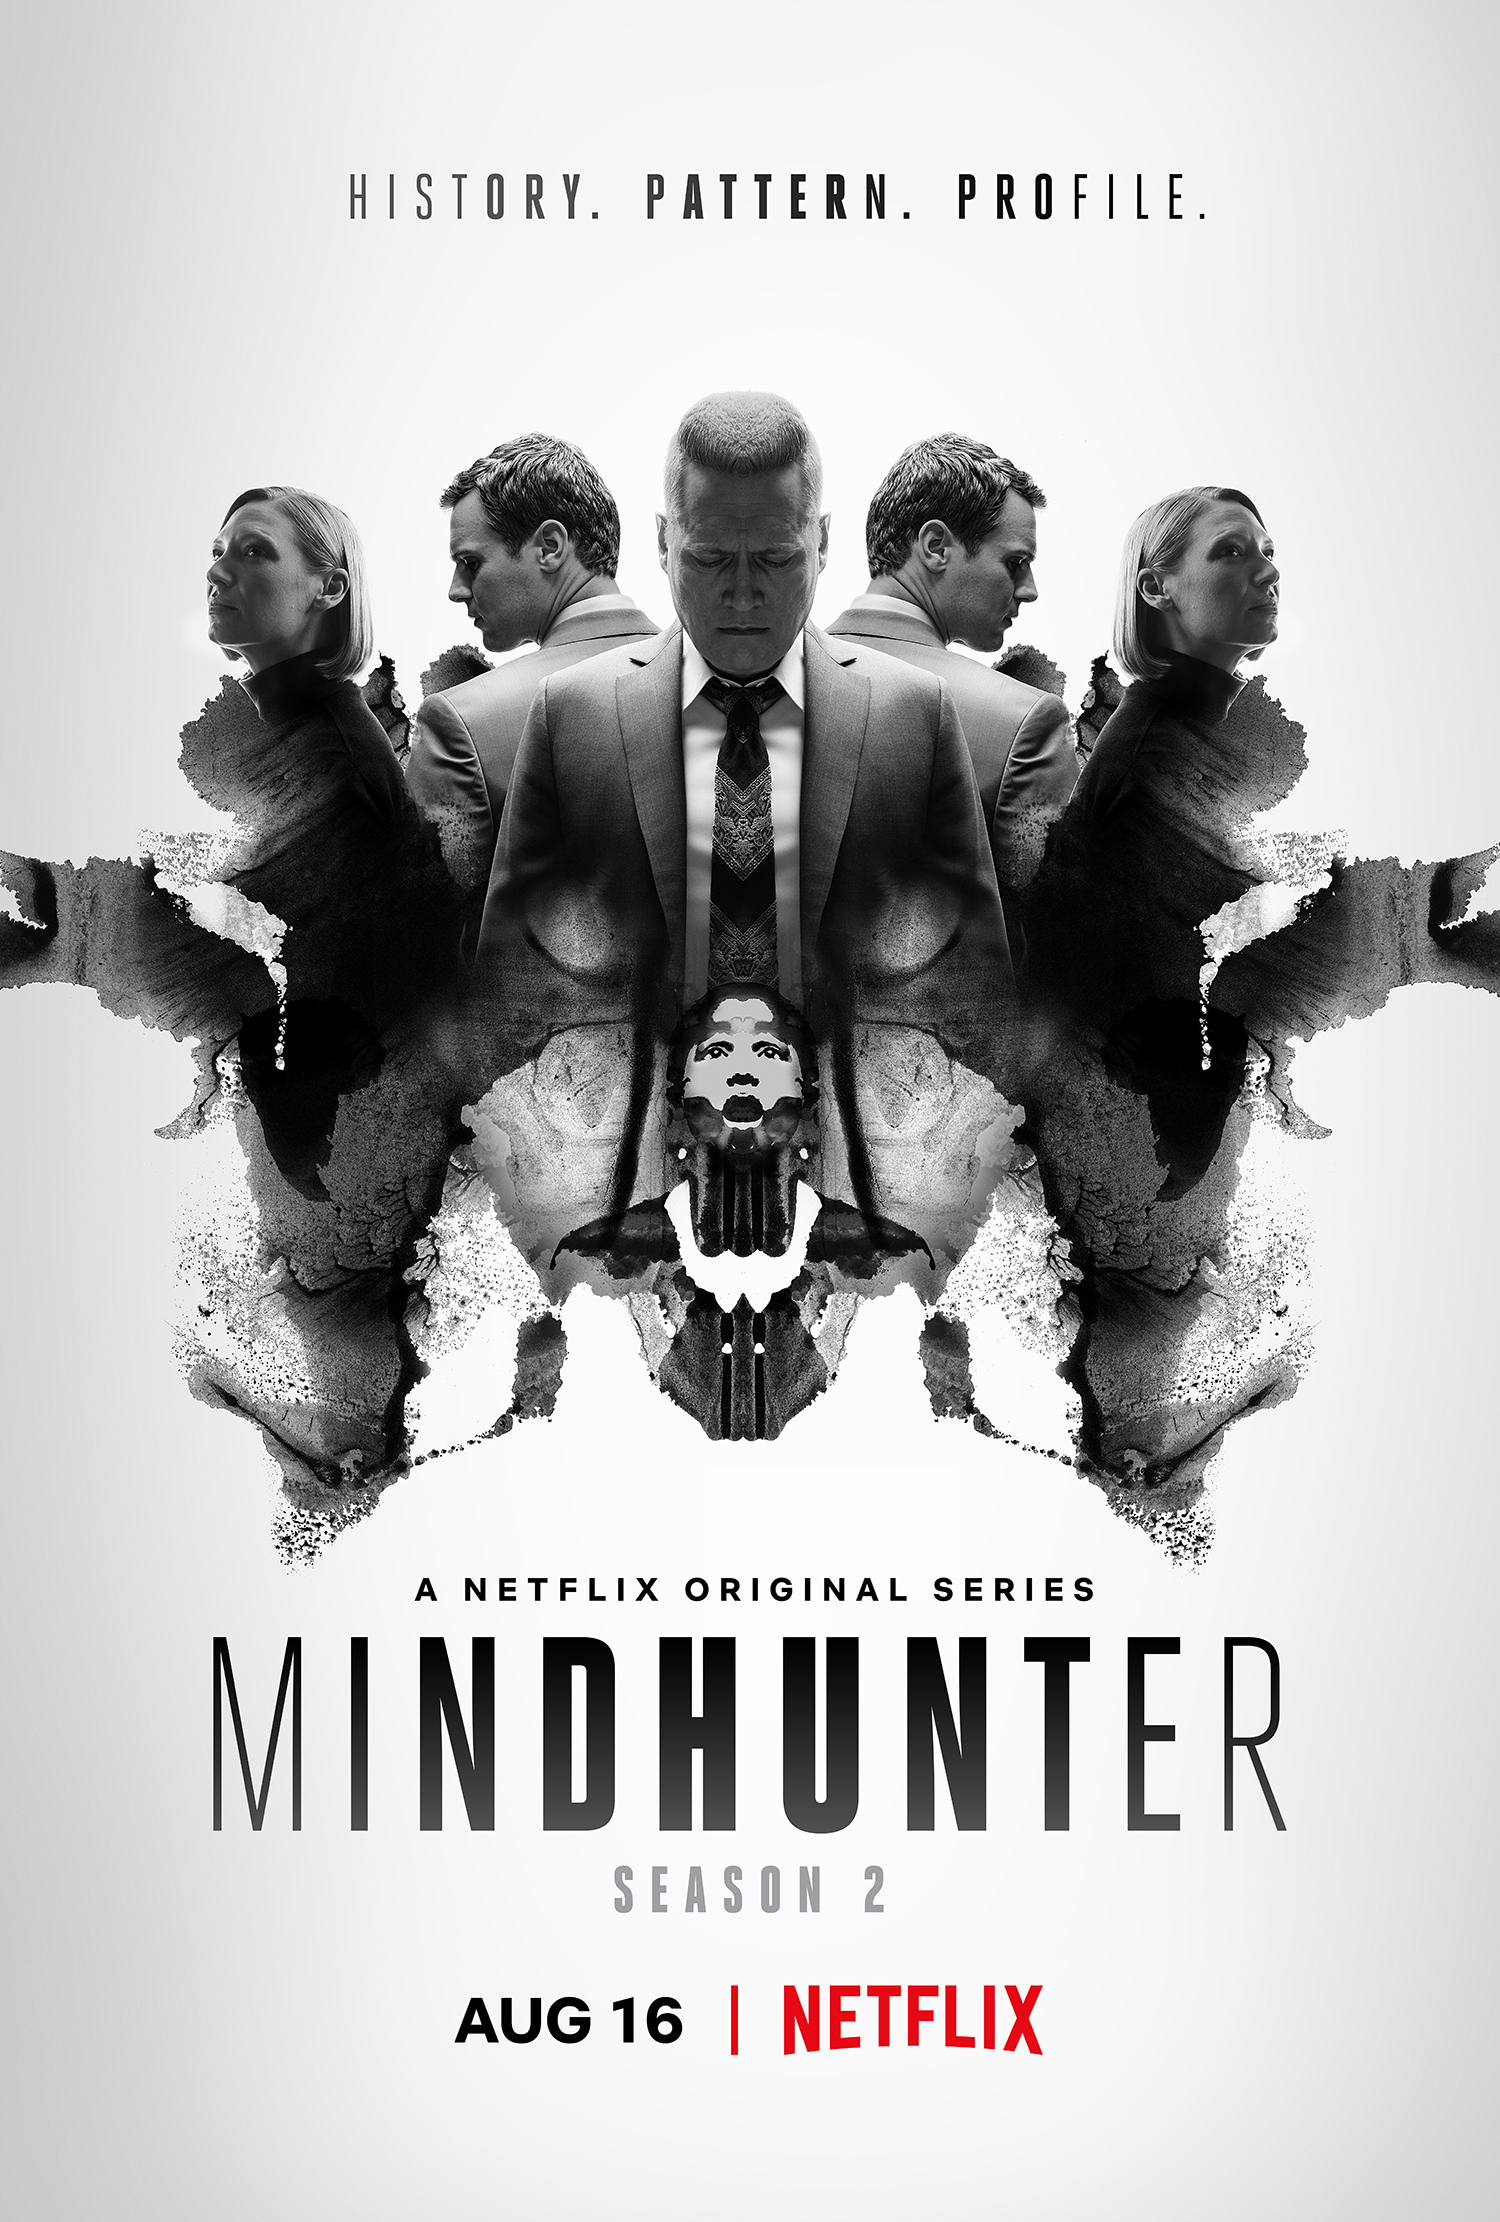 mindhunter season 1-2 in hindi dubbed download 720p